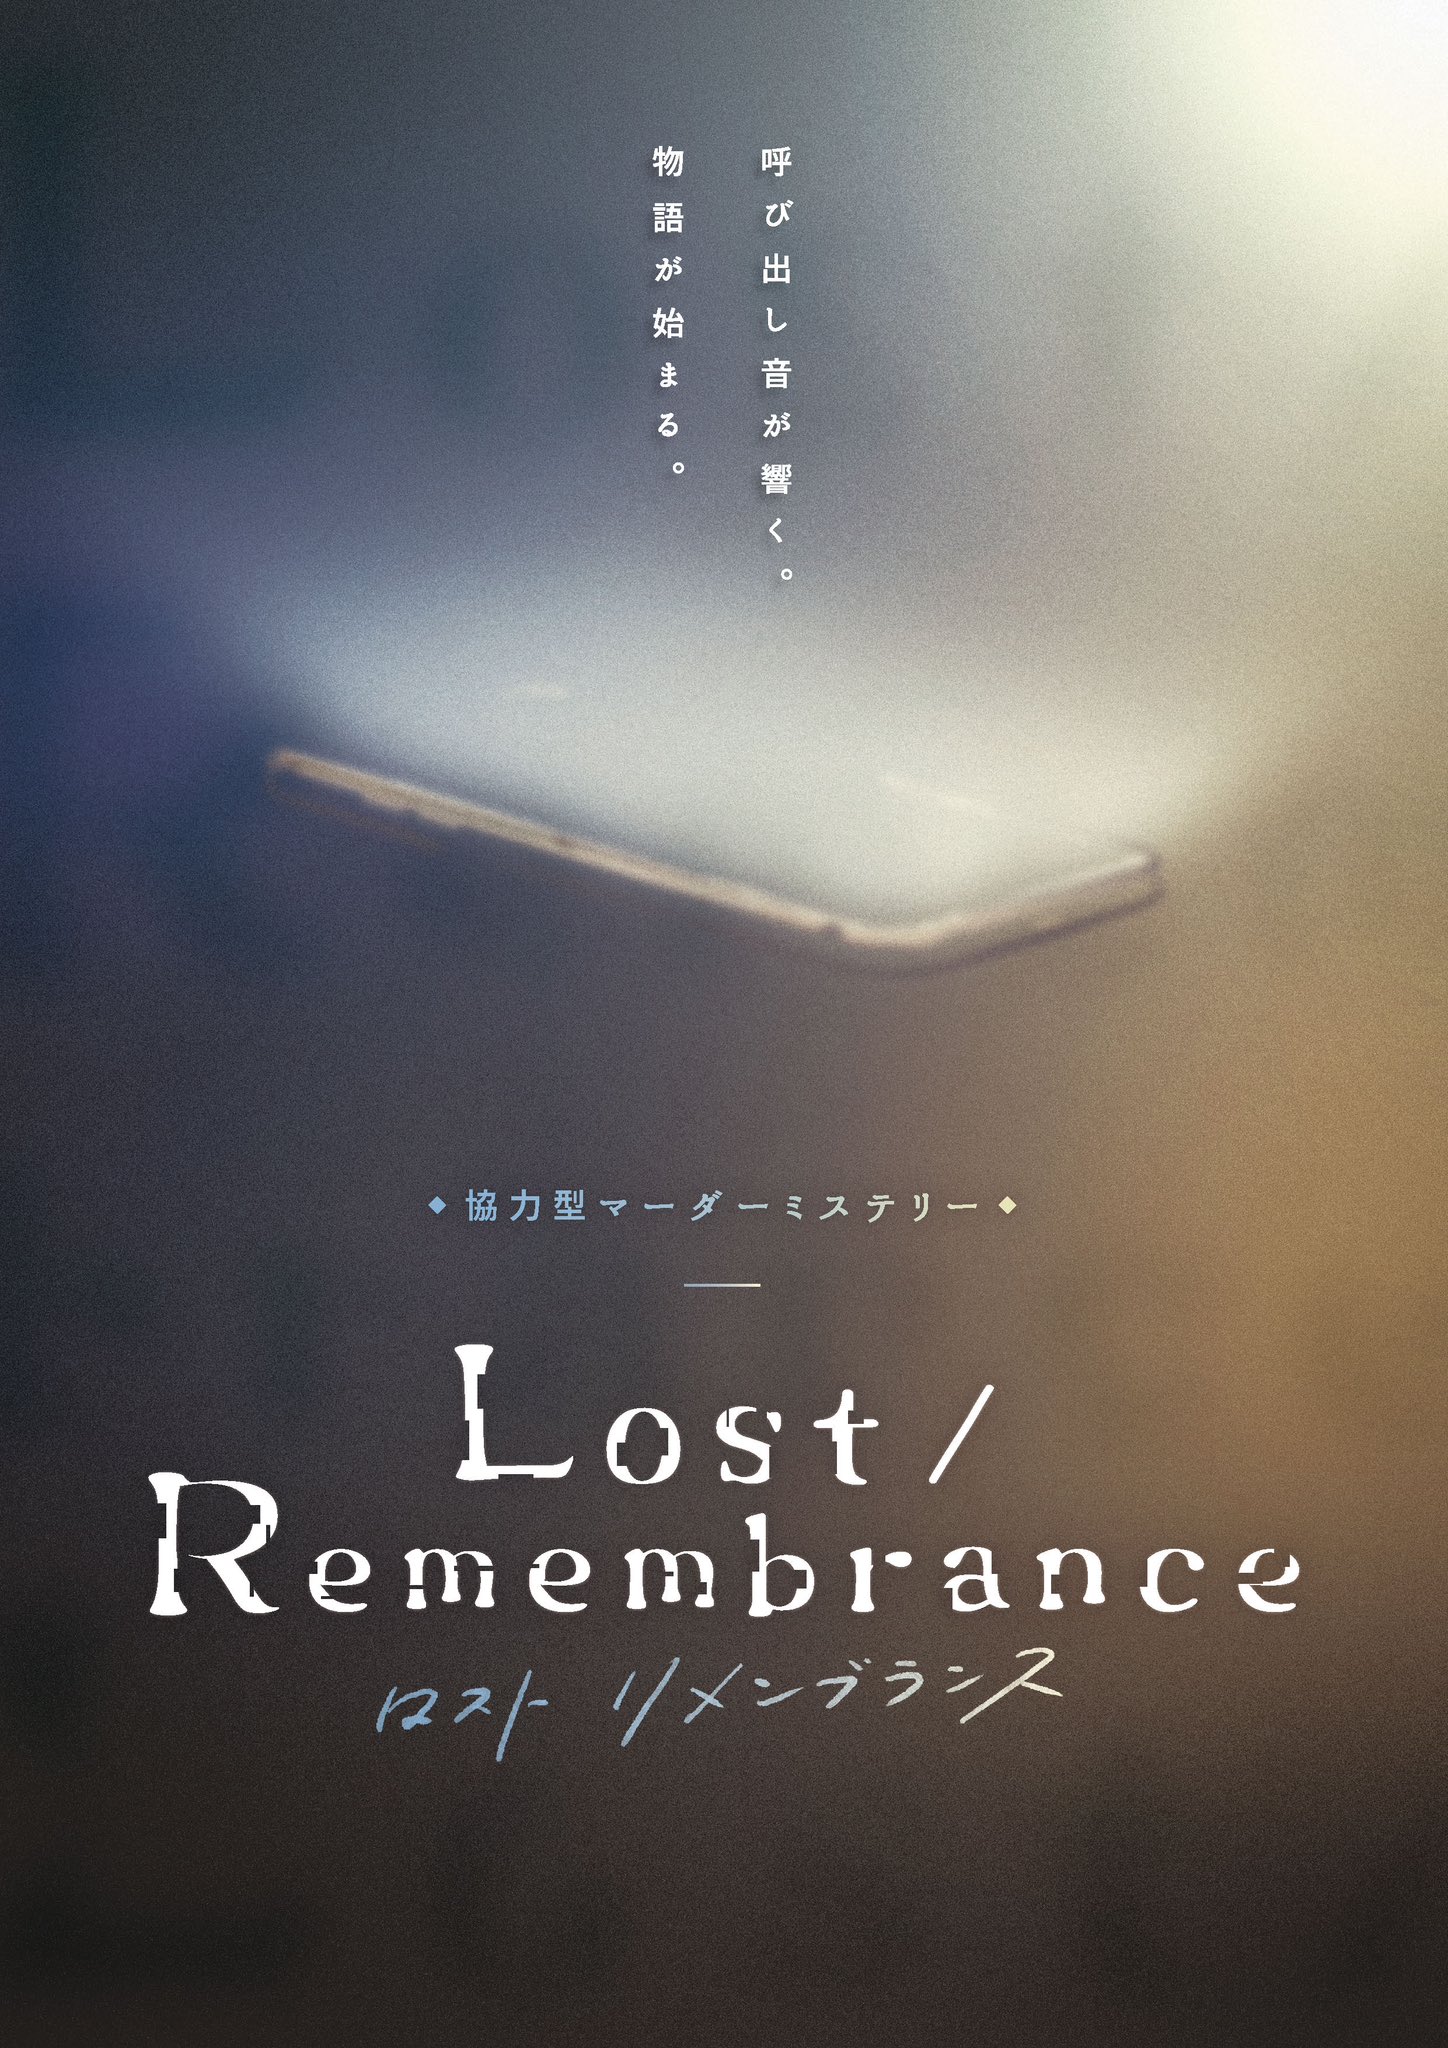 Lost / Remembrance